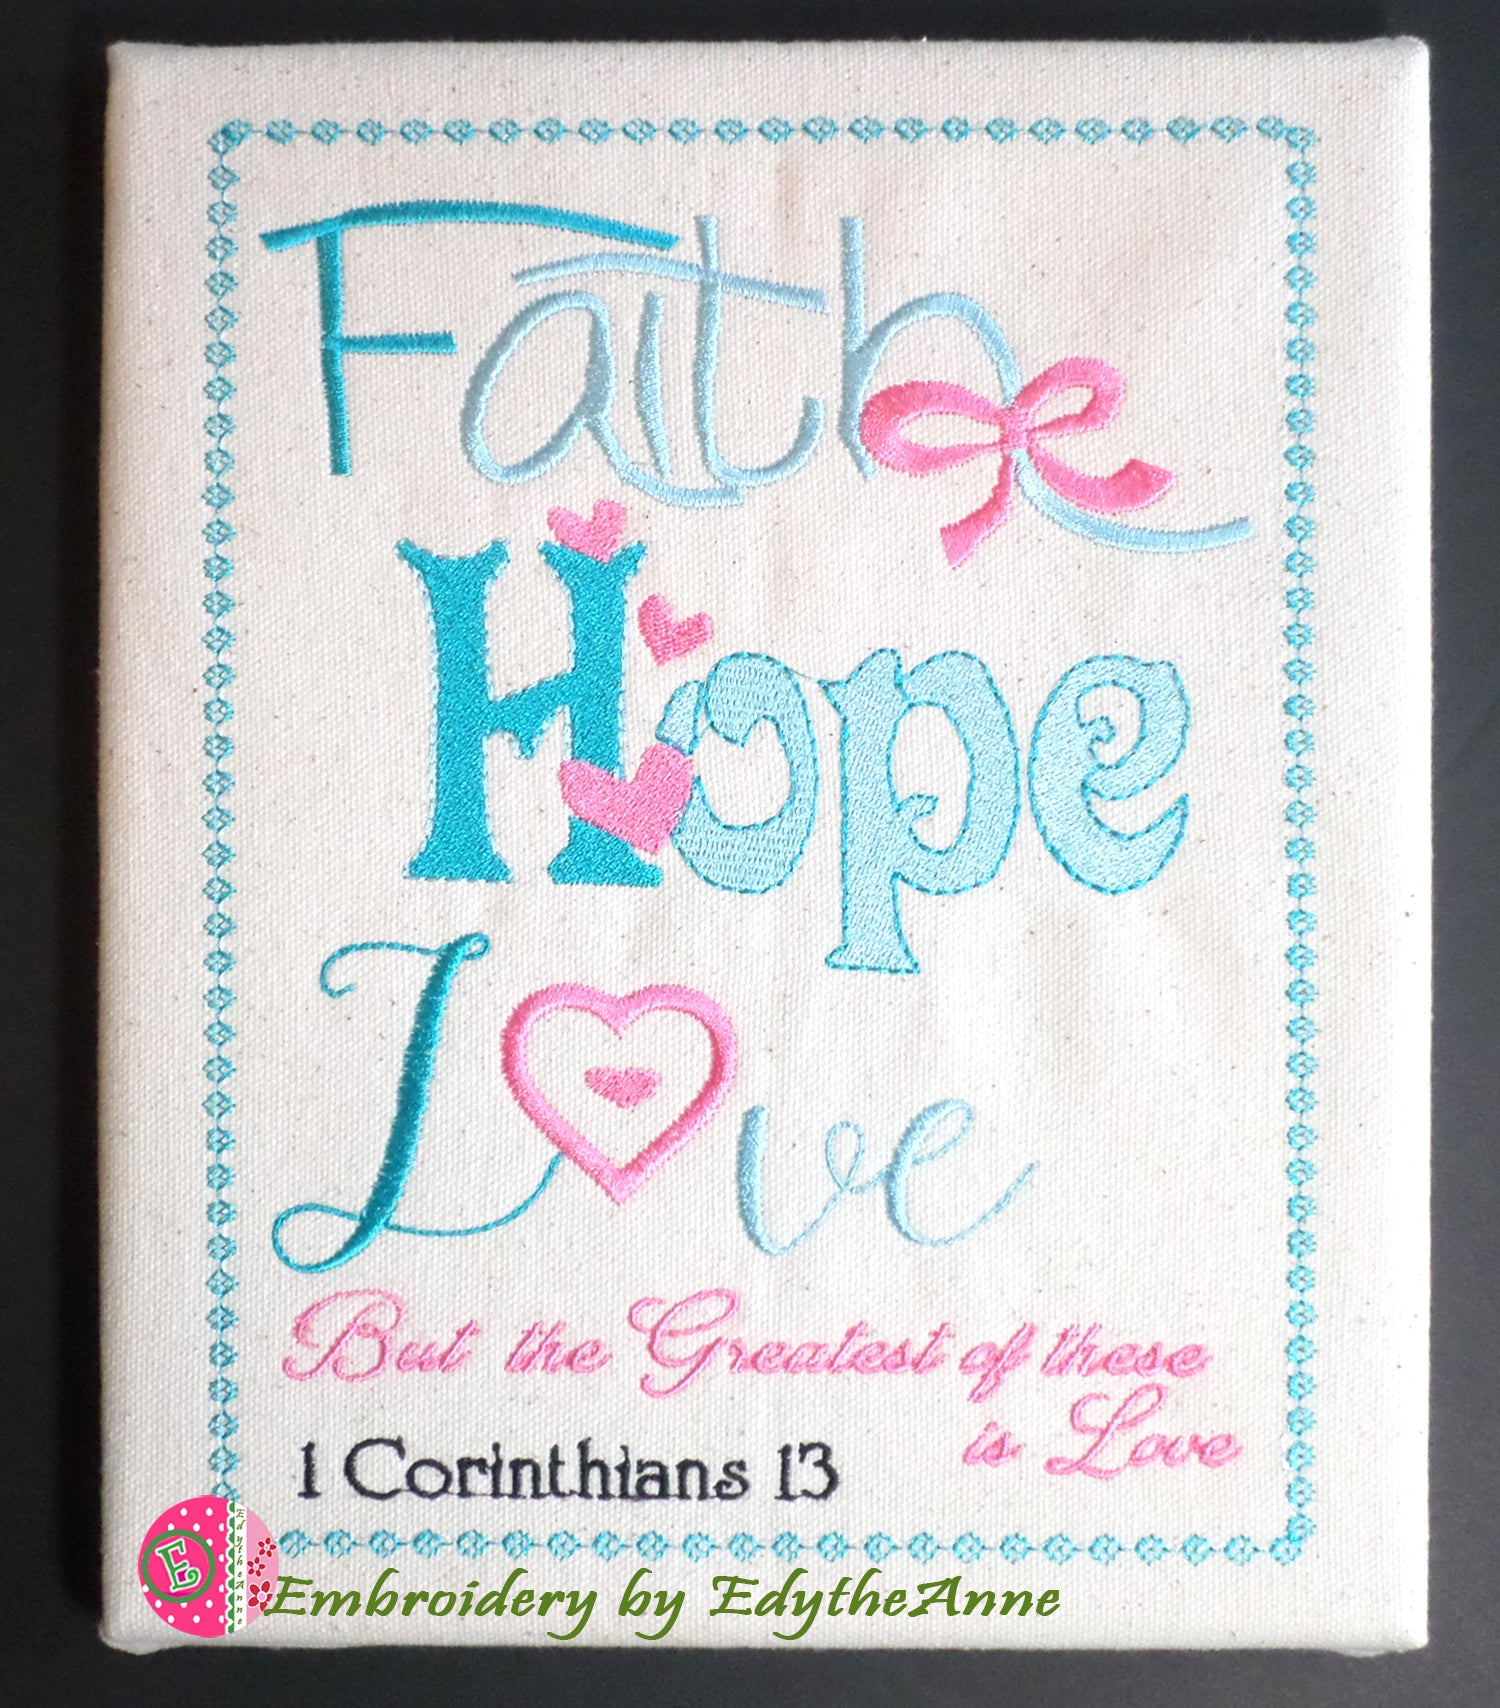 Faith Hope Love Canvas Tote Bag - 65% OFF